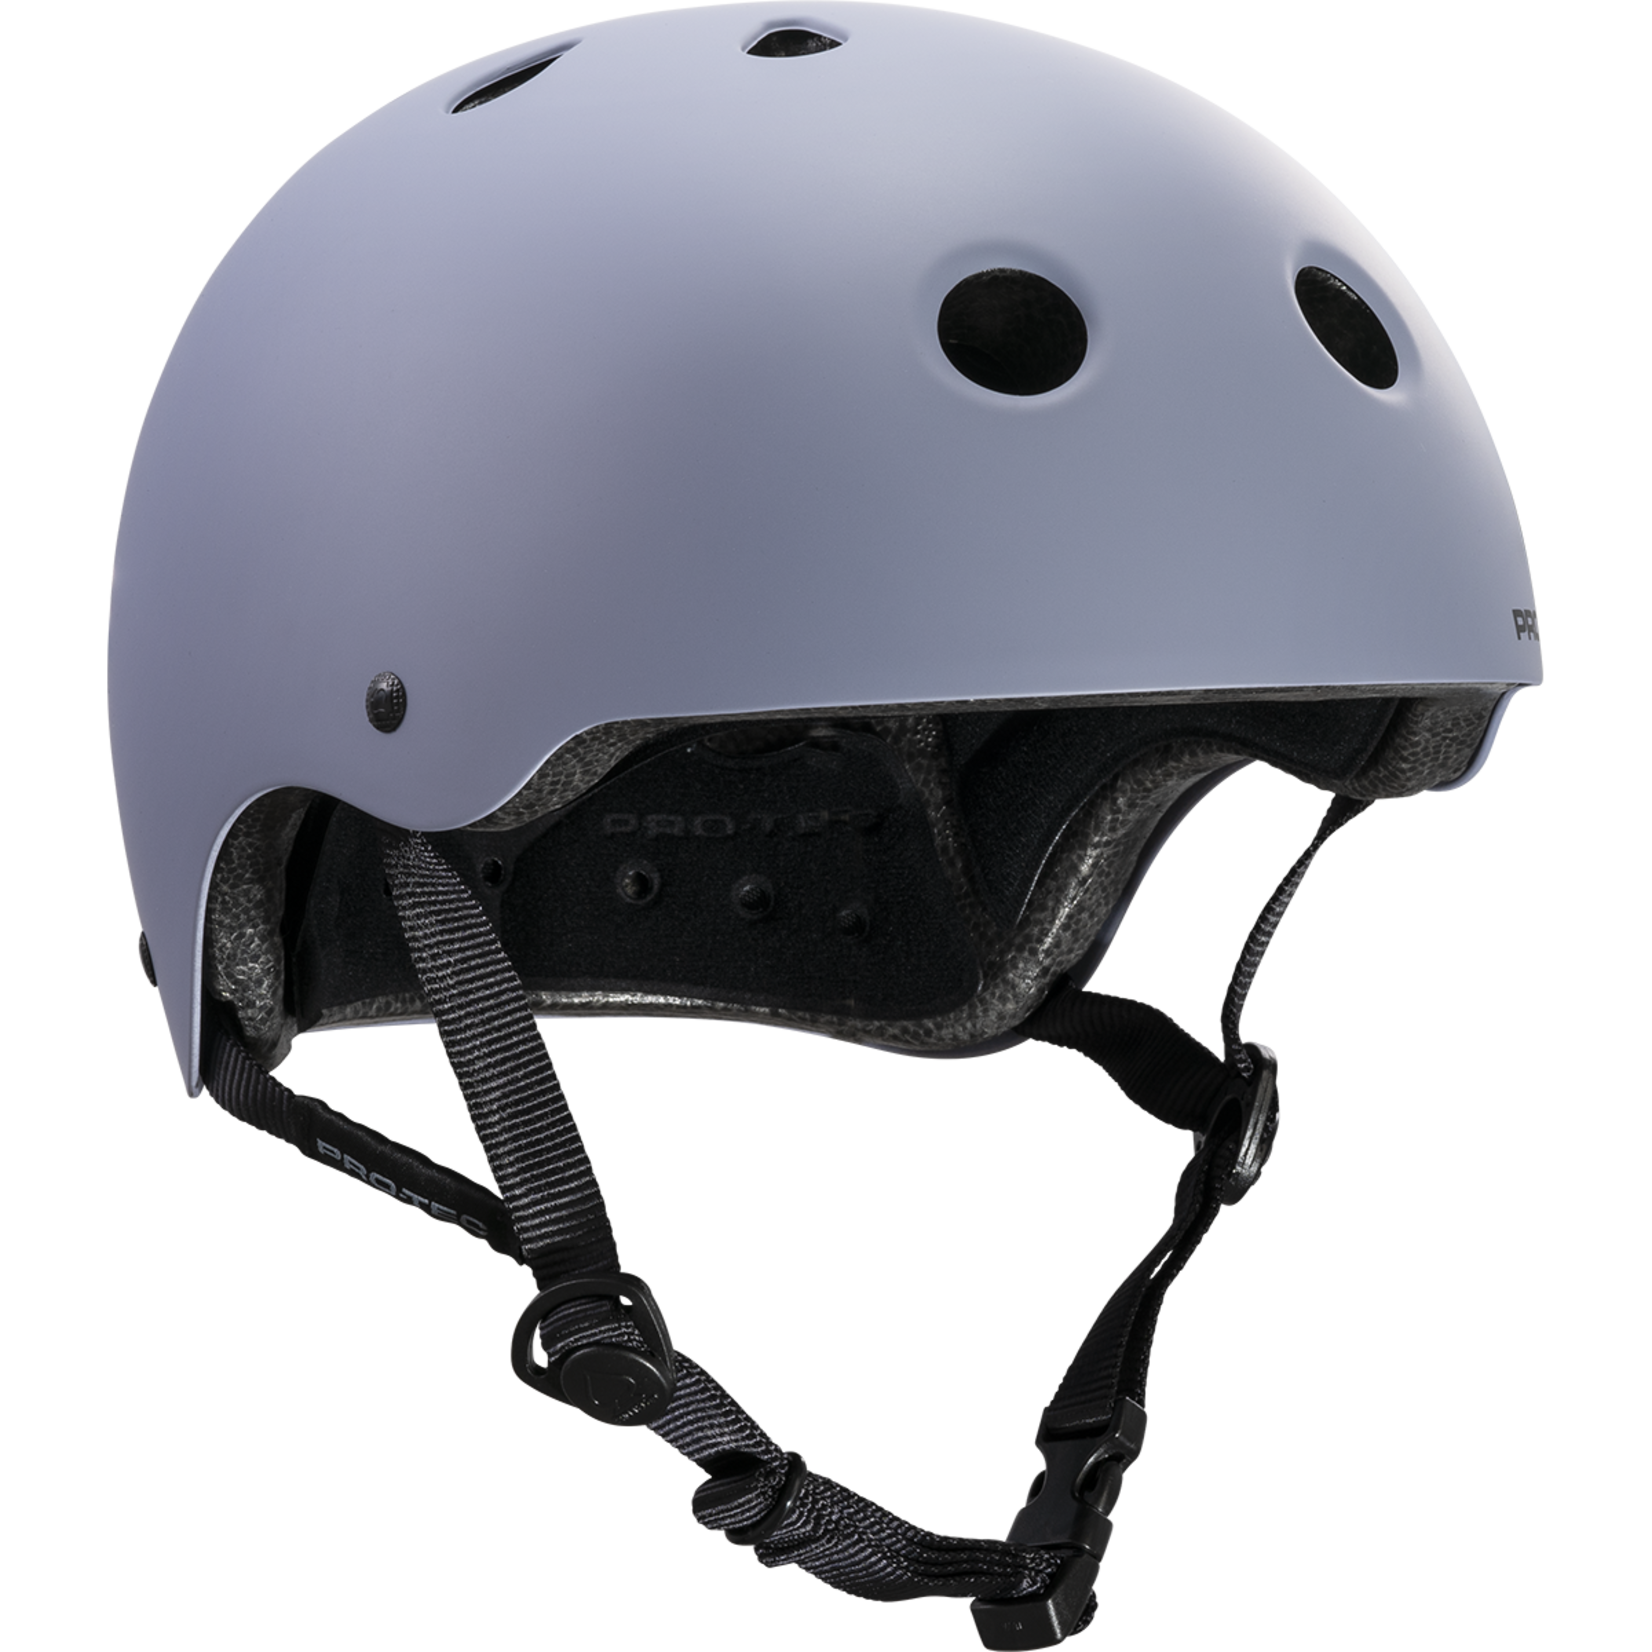 PRO-TEC Pro-Tec Certified Helmet - Lavender